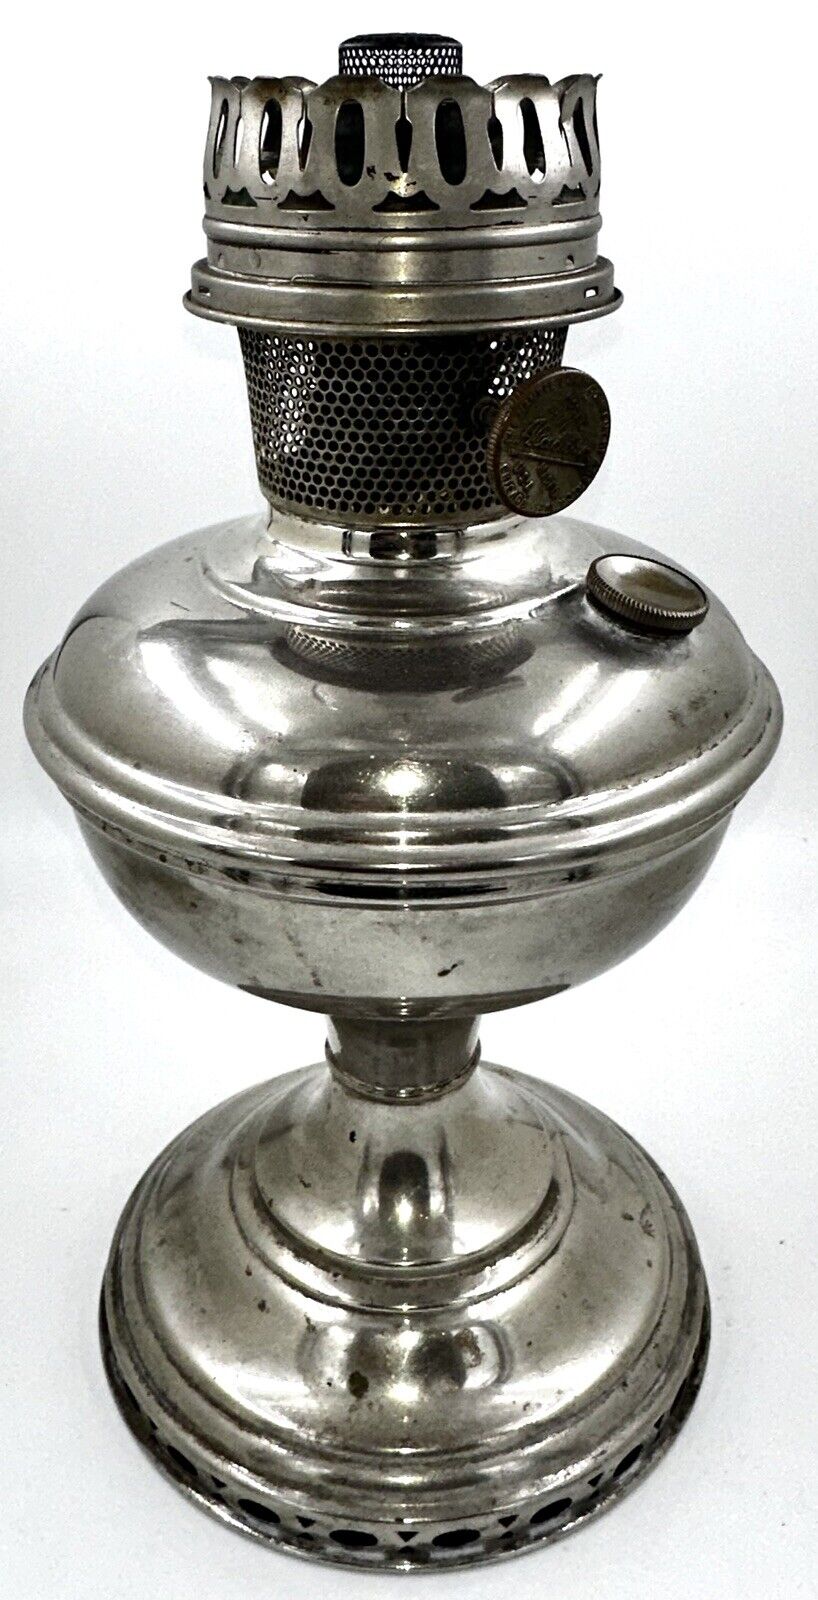 Antique ALADDIN 11 Center Draft Kerosene Lamp w/ Flame Spreader, Burner - Nickel